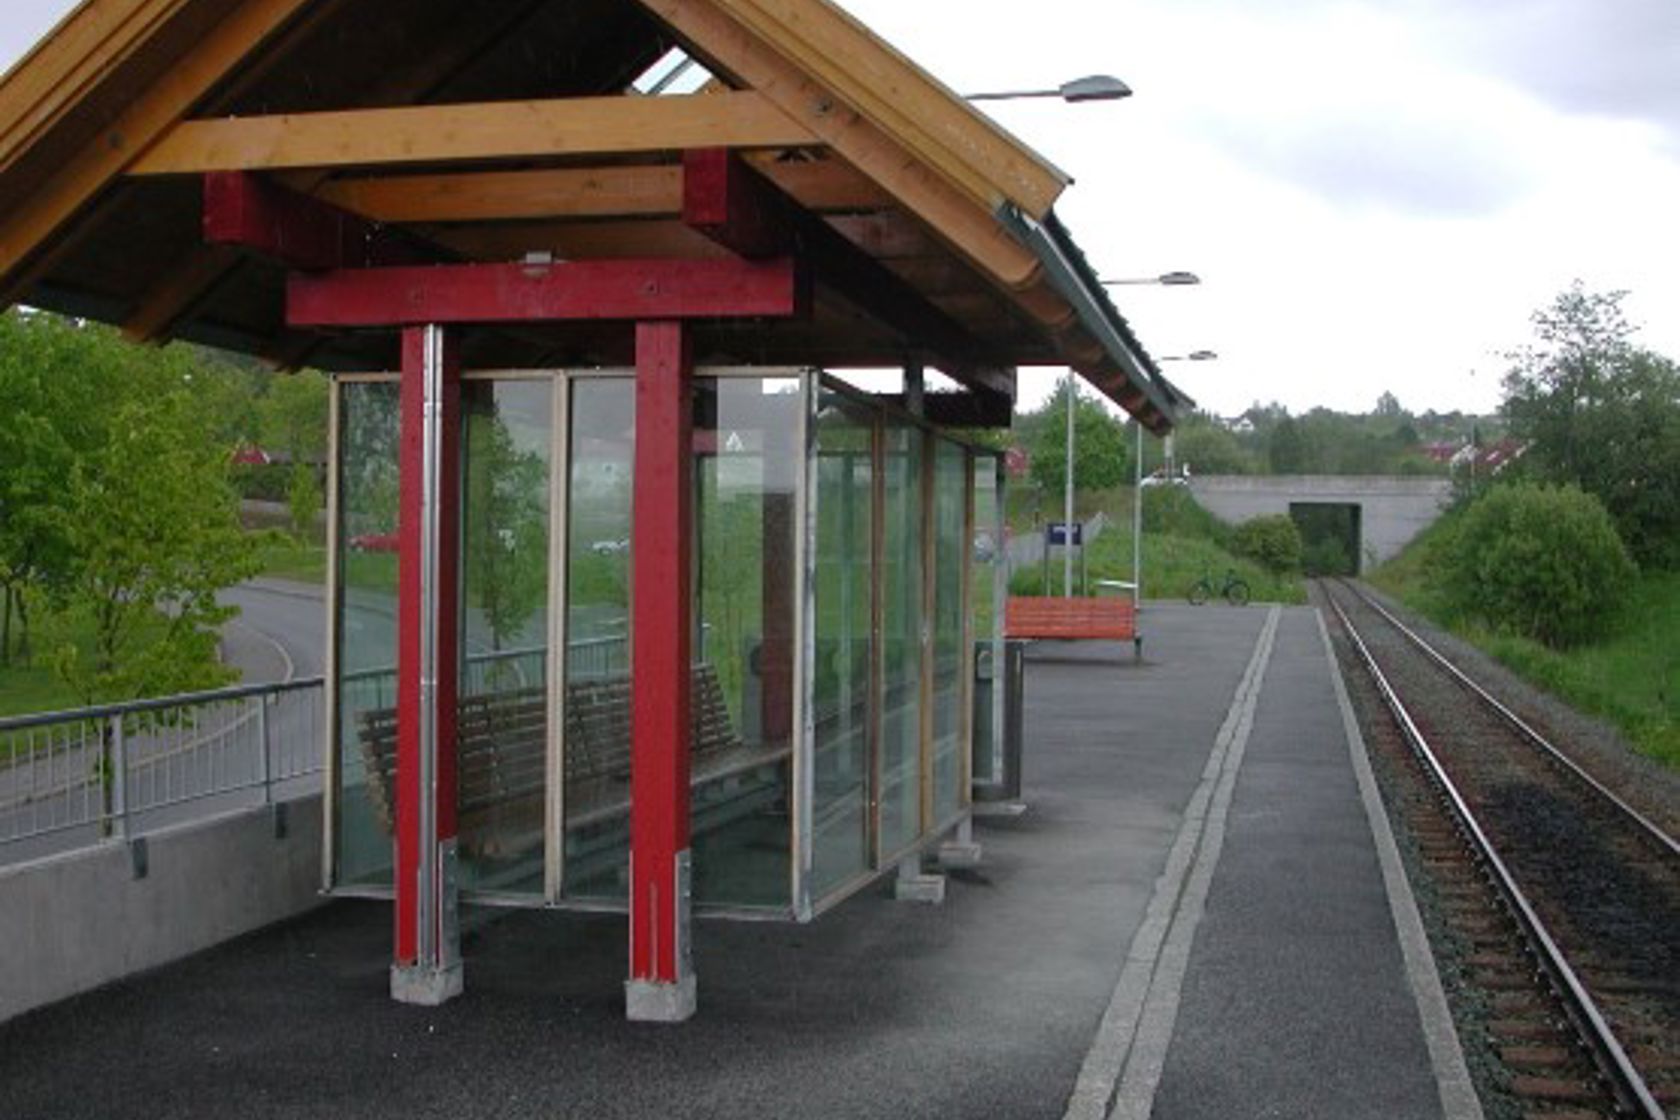 Exterior view of Lerkendal station